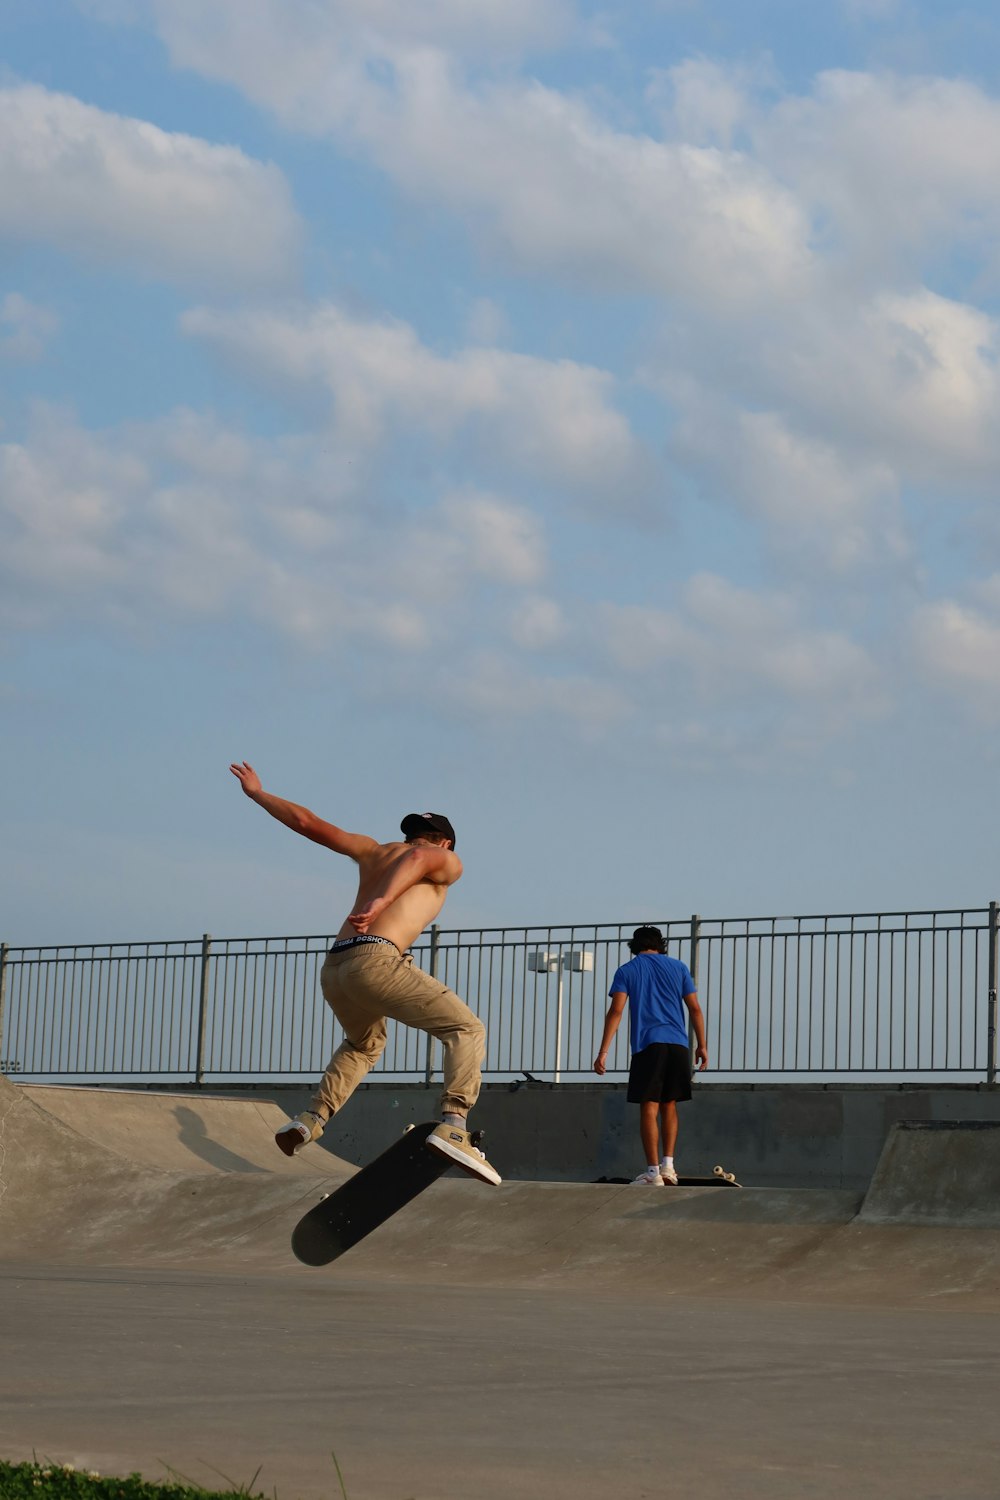 a man doing a trick on a skateboard